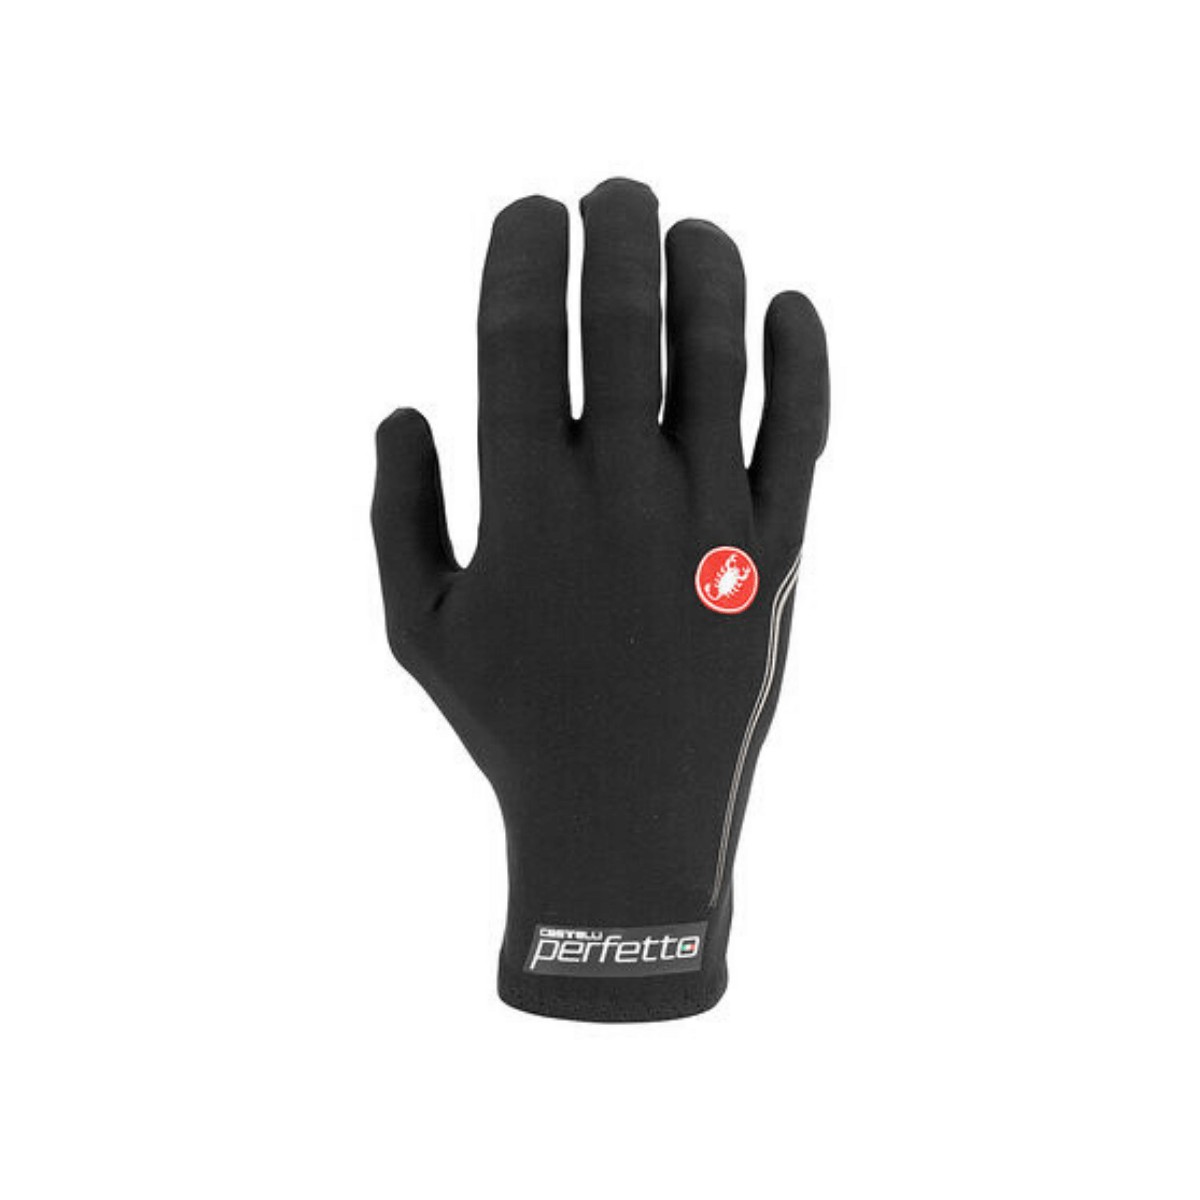 Castelli Perfetto Light Gloves Black Unissex, Tamanho L